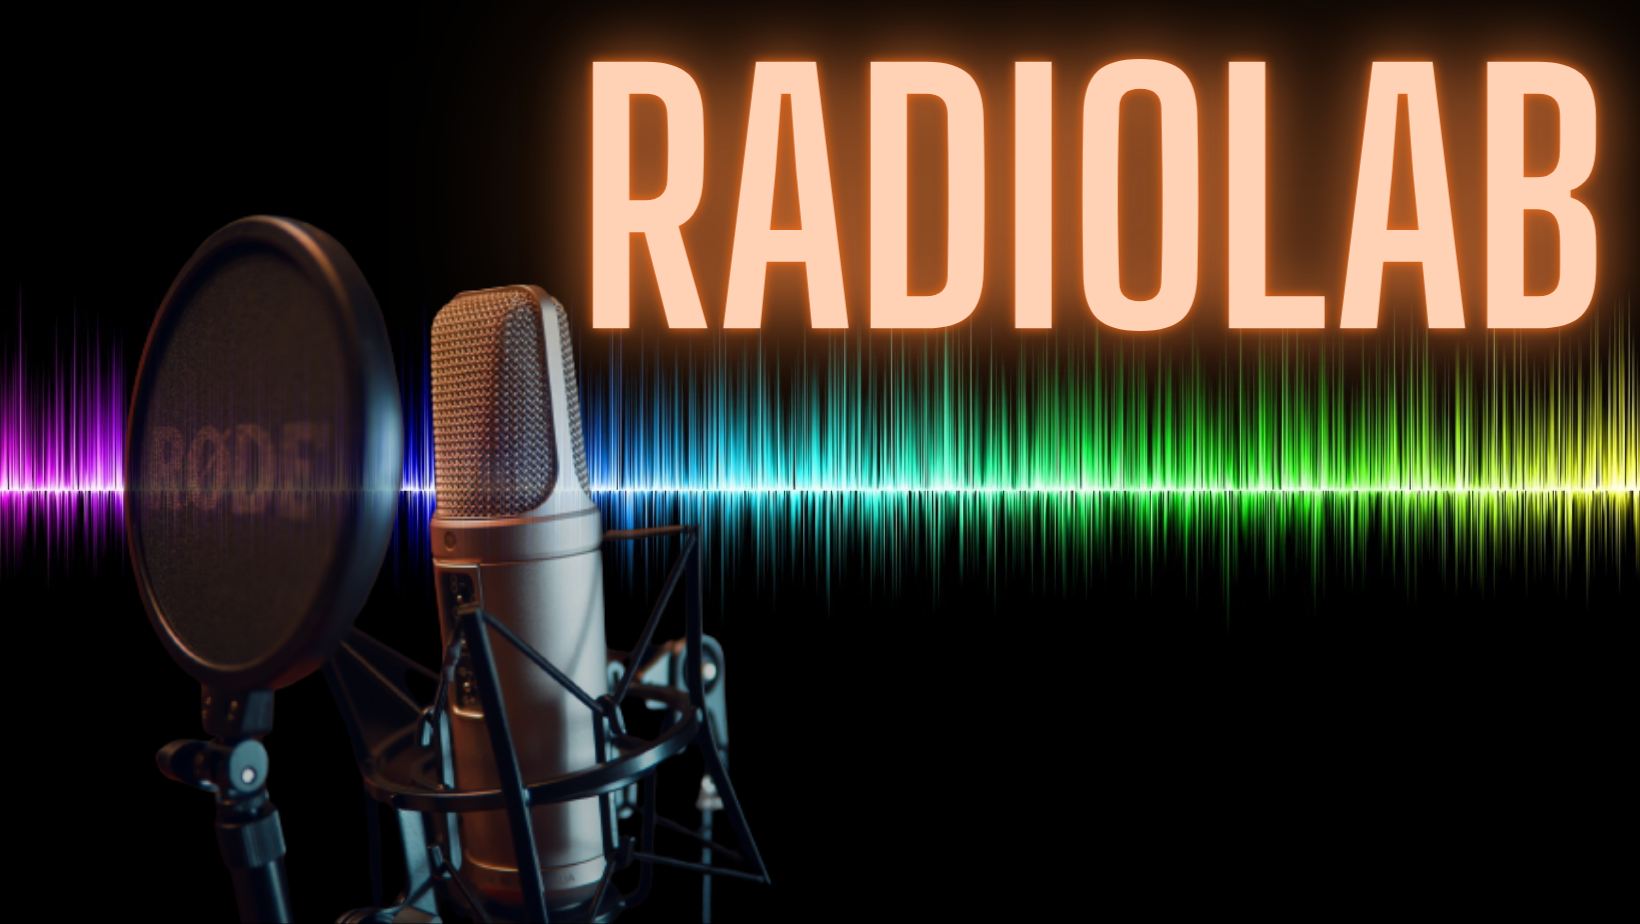 Radiolab Podcast – Listen Here